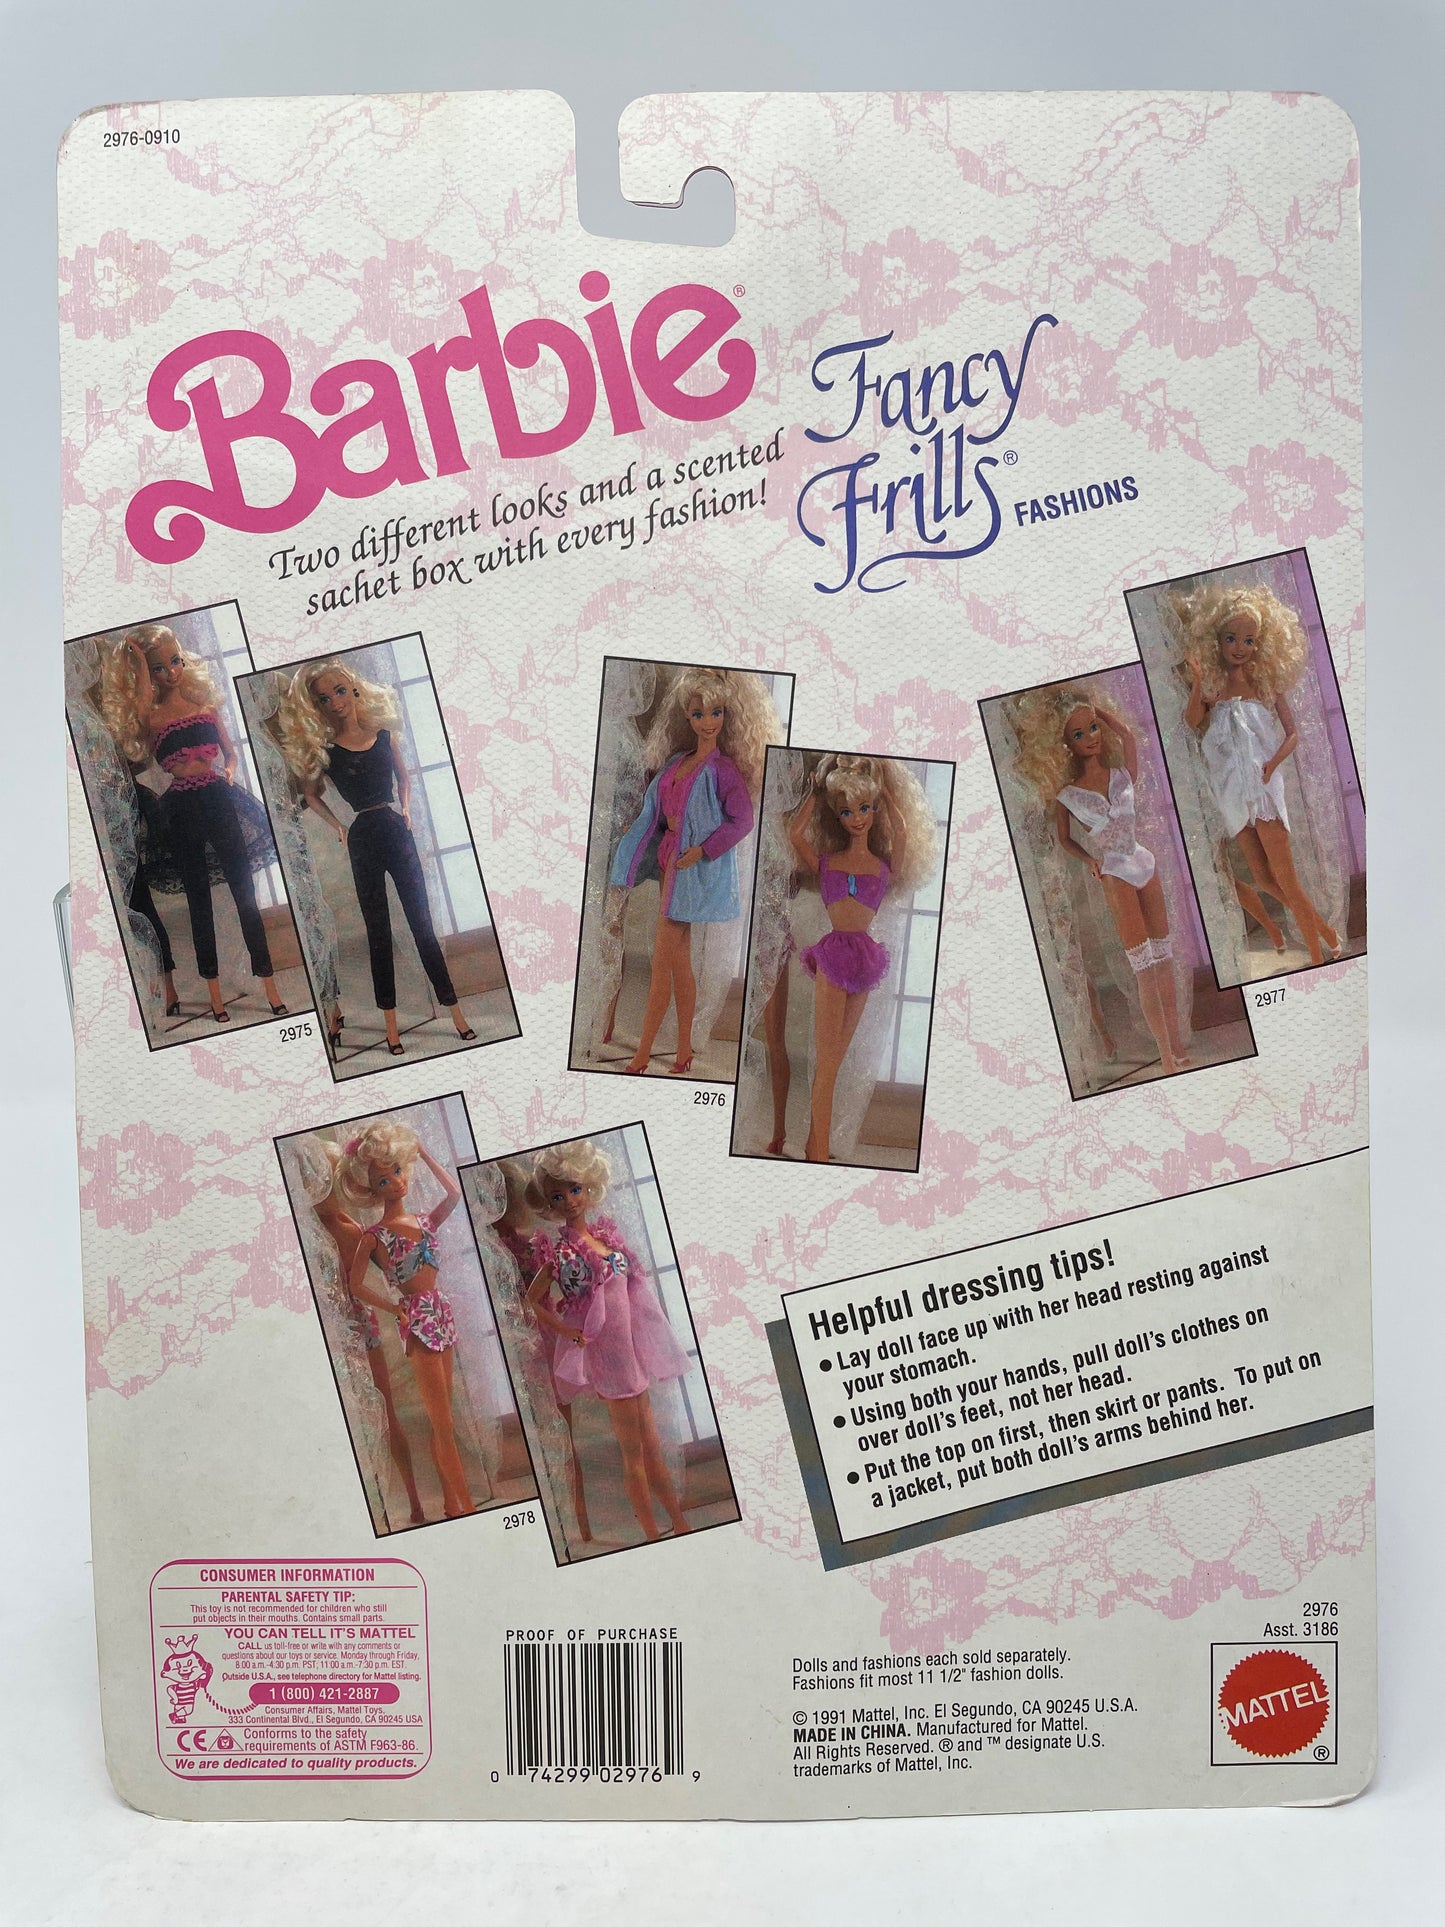 BARBIE FANCY FRILLS FASHIONS - TWO GREAT LINGERIE LOOKS - PINK/PURPLE/AQUA - #2976  - MATTEL 1991